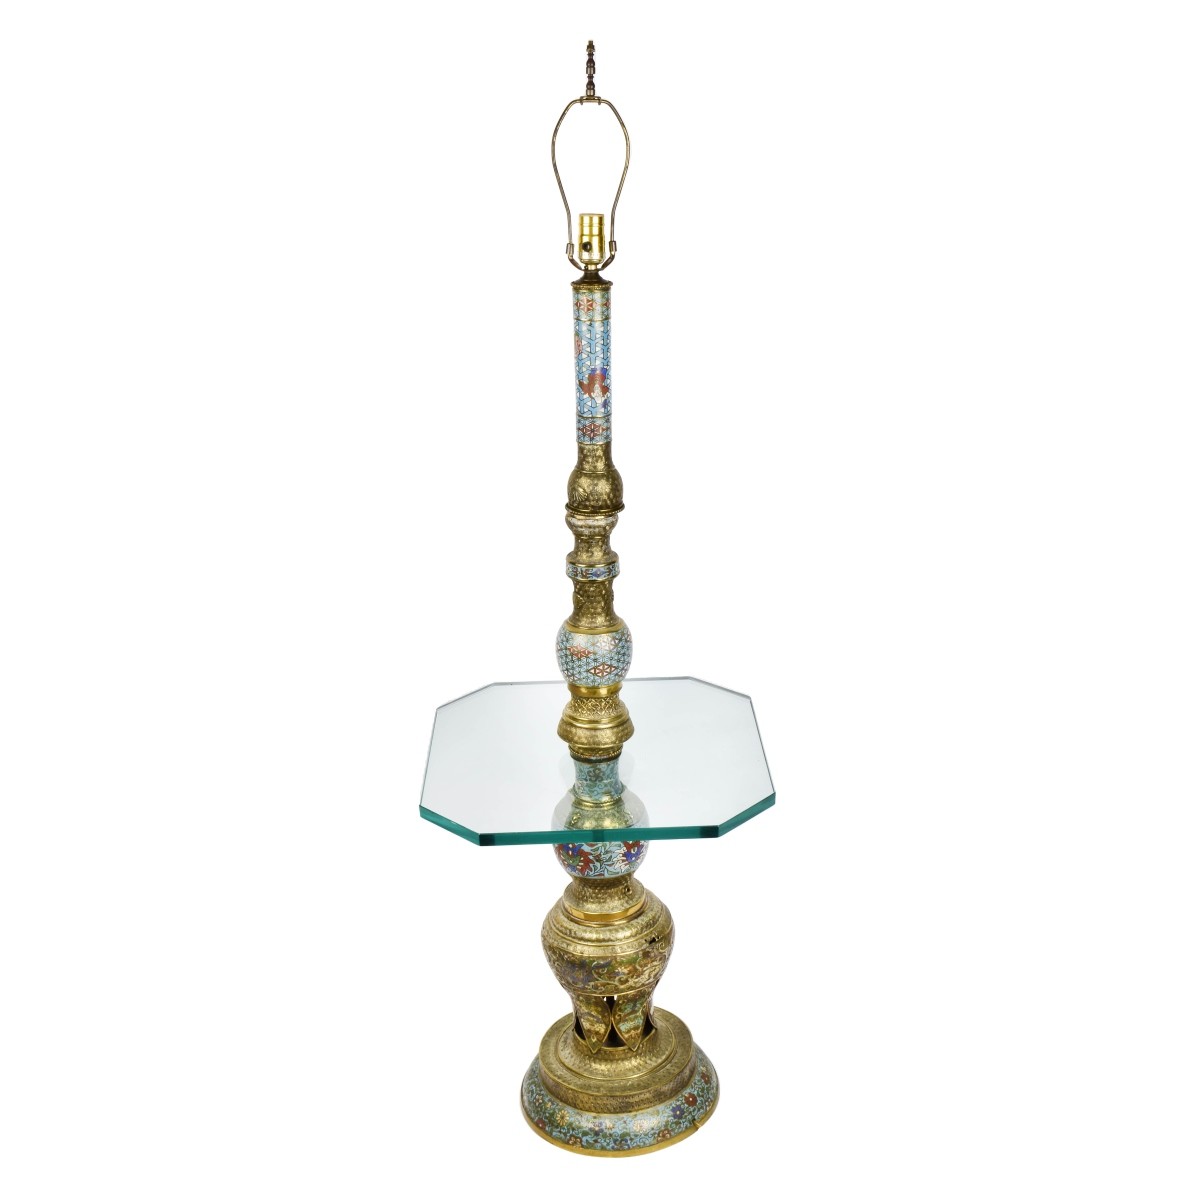 Antique Chinese Cloisonne Enamel Floor Lamp